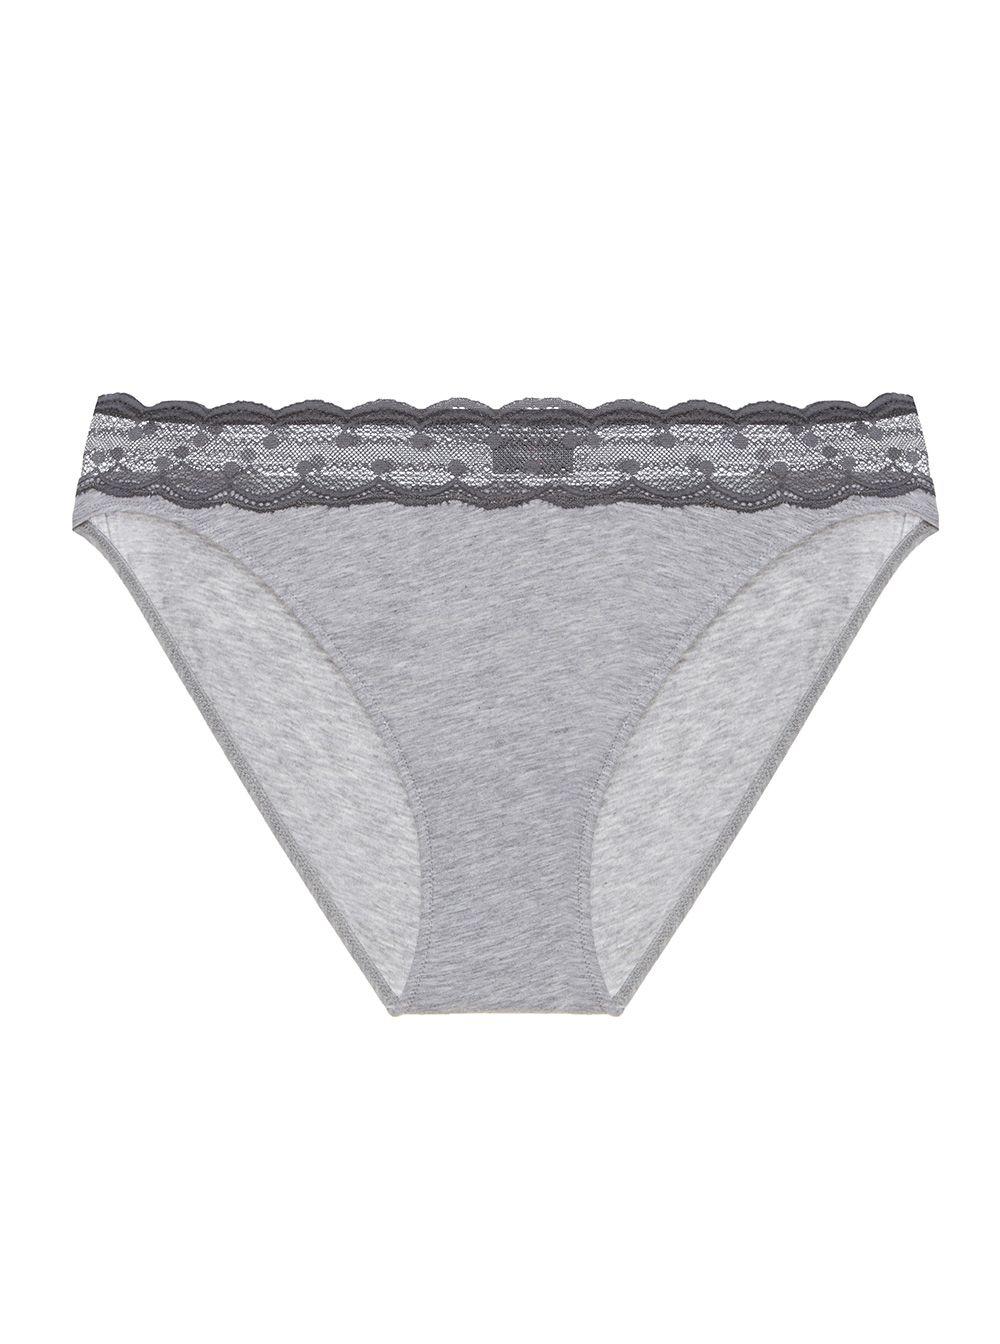 Cosabella Avi Cotton Tween Bikini in Heather Gray/Dots (Gray) - Save 46 ...